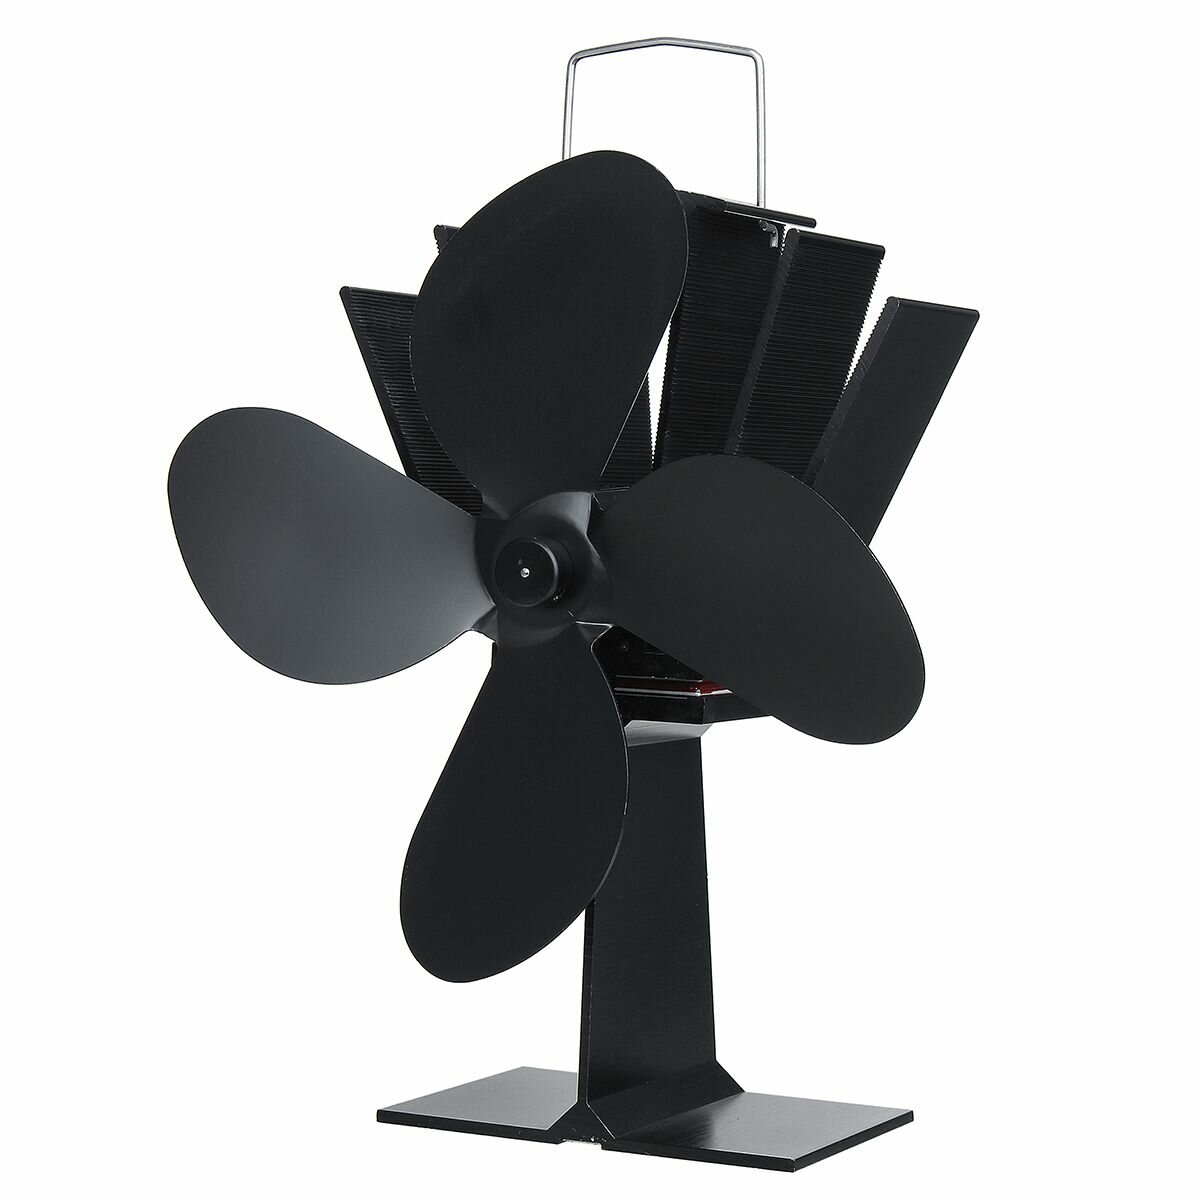 

4 Blade Heat Self-Power Wood Stove Fan Burner Efficient Fireplace Silent